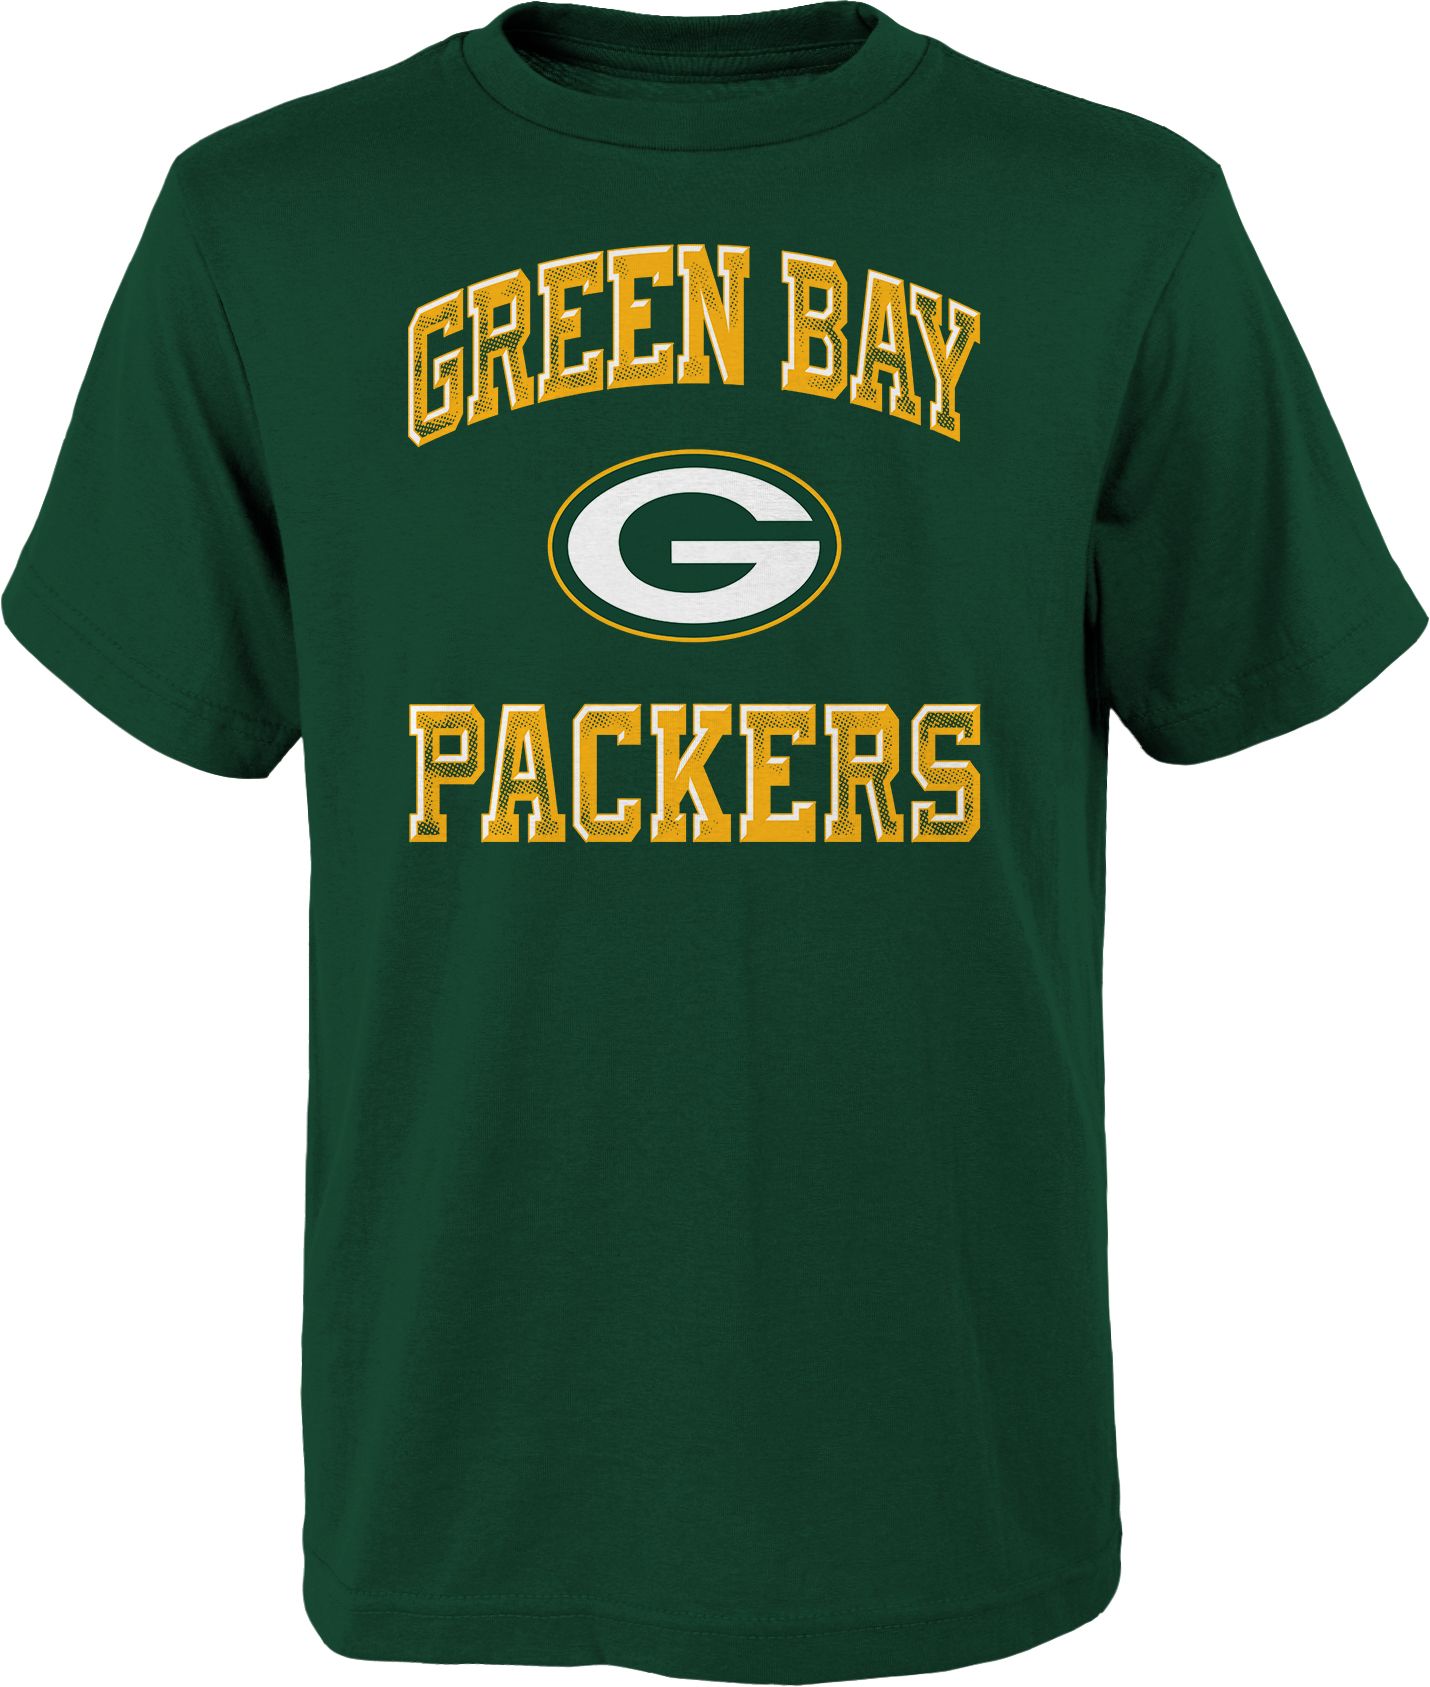 green bay packers shirts cheap